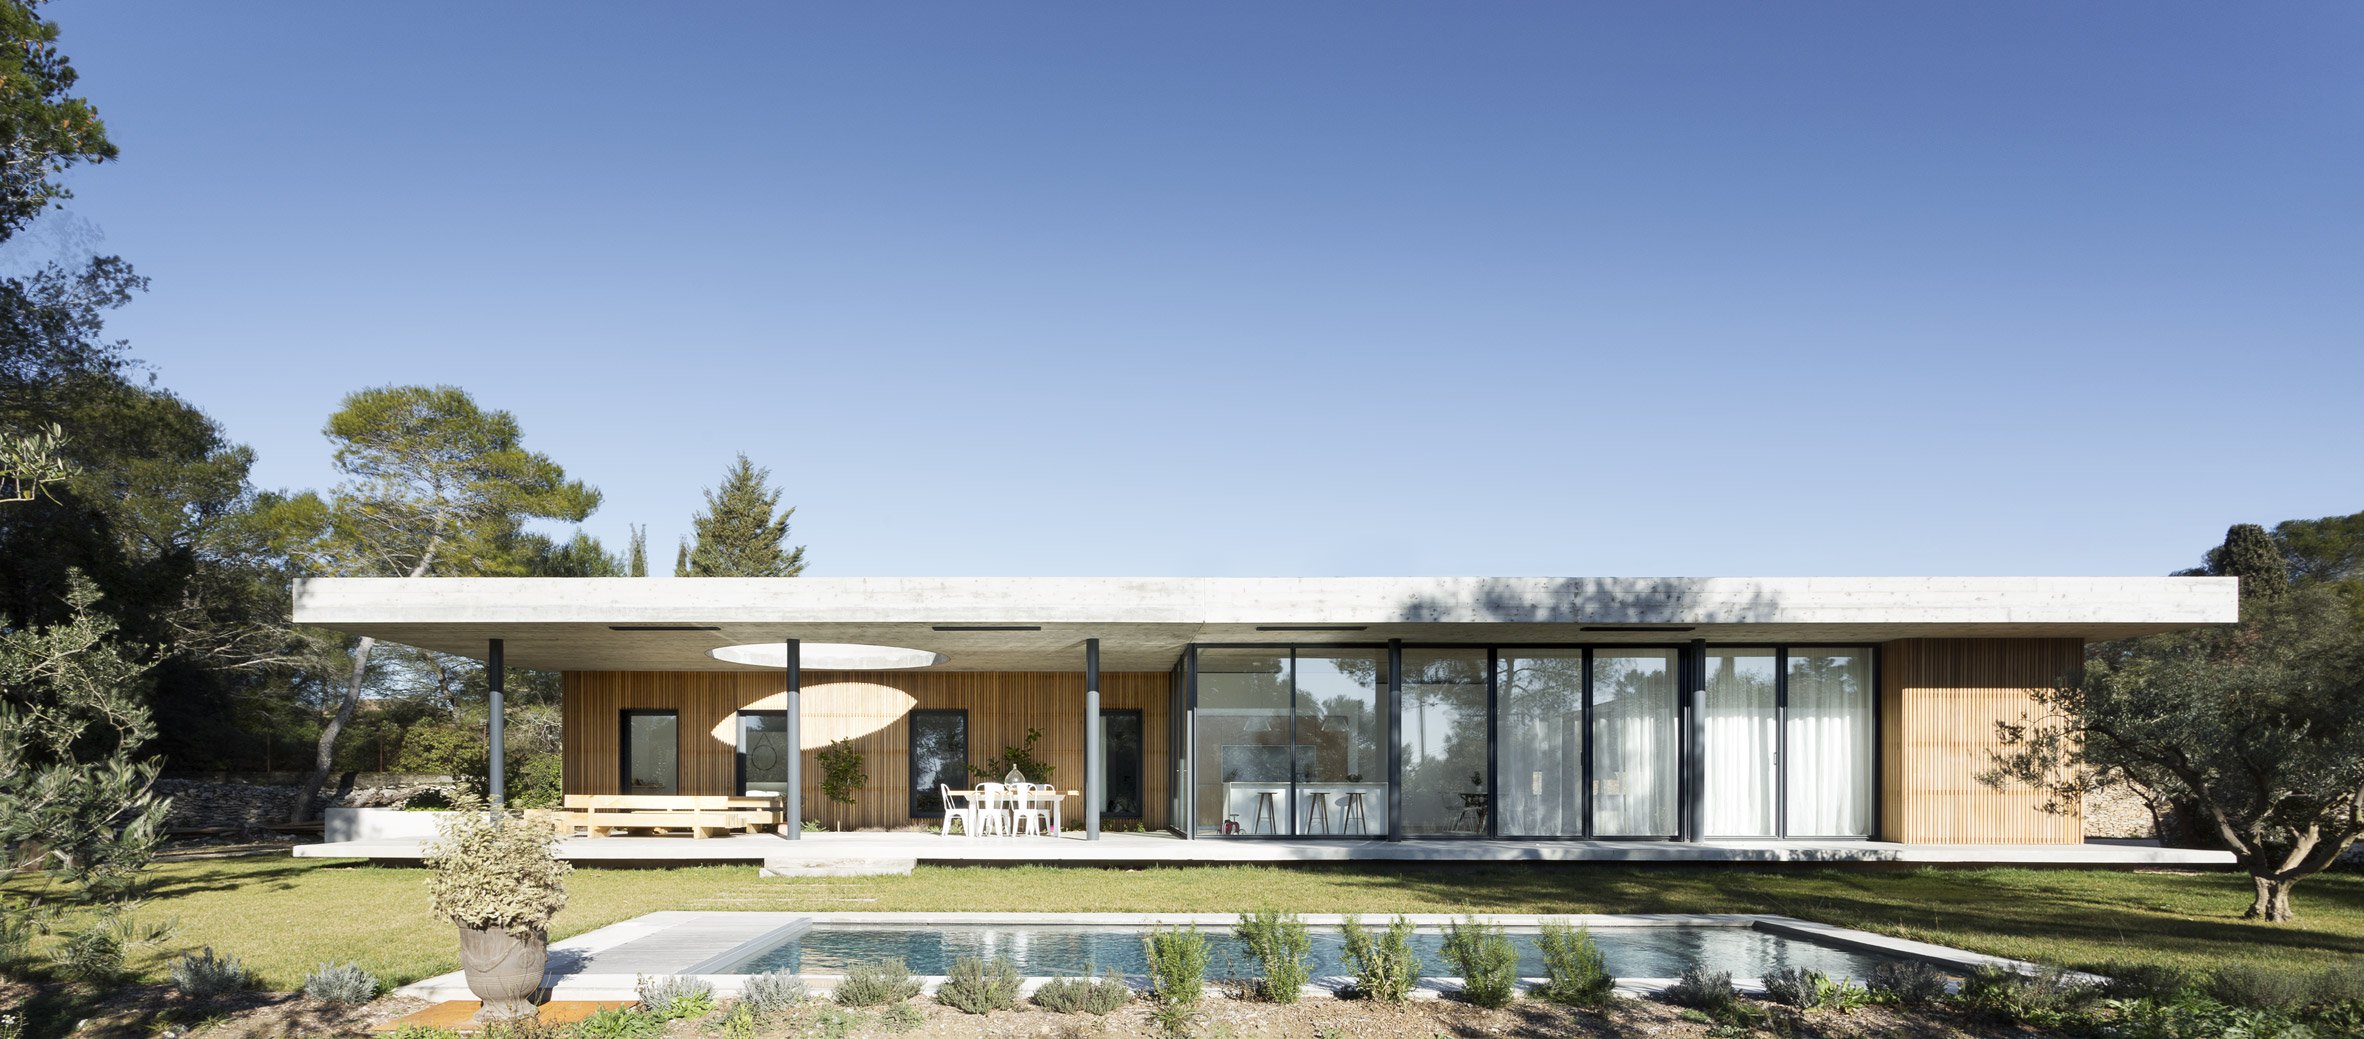 Architecture: Amazing House Architecture With Concrete Ceiling Design